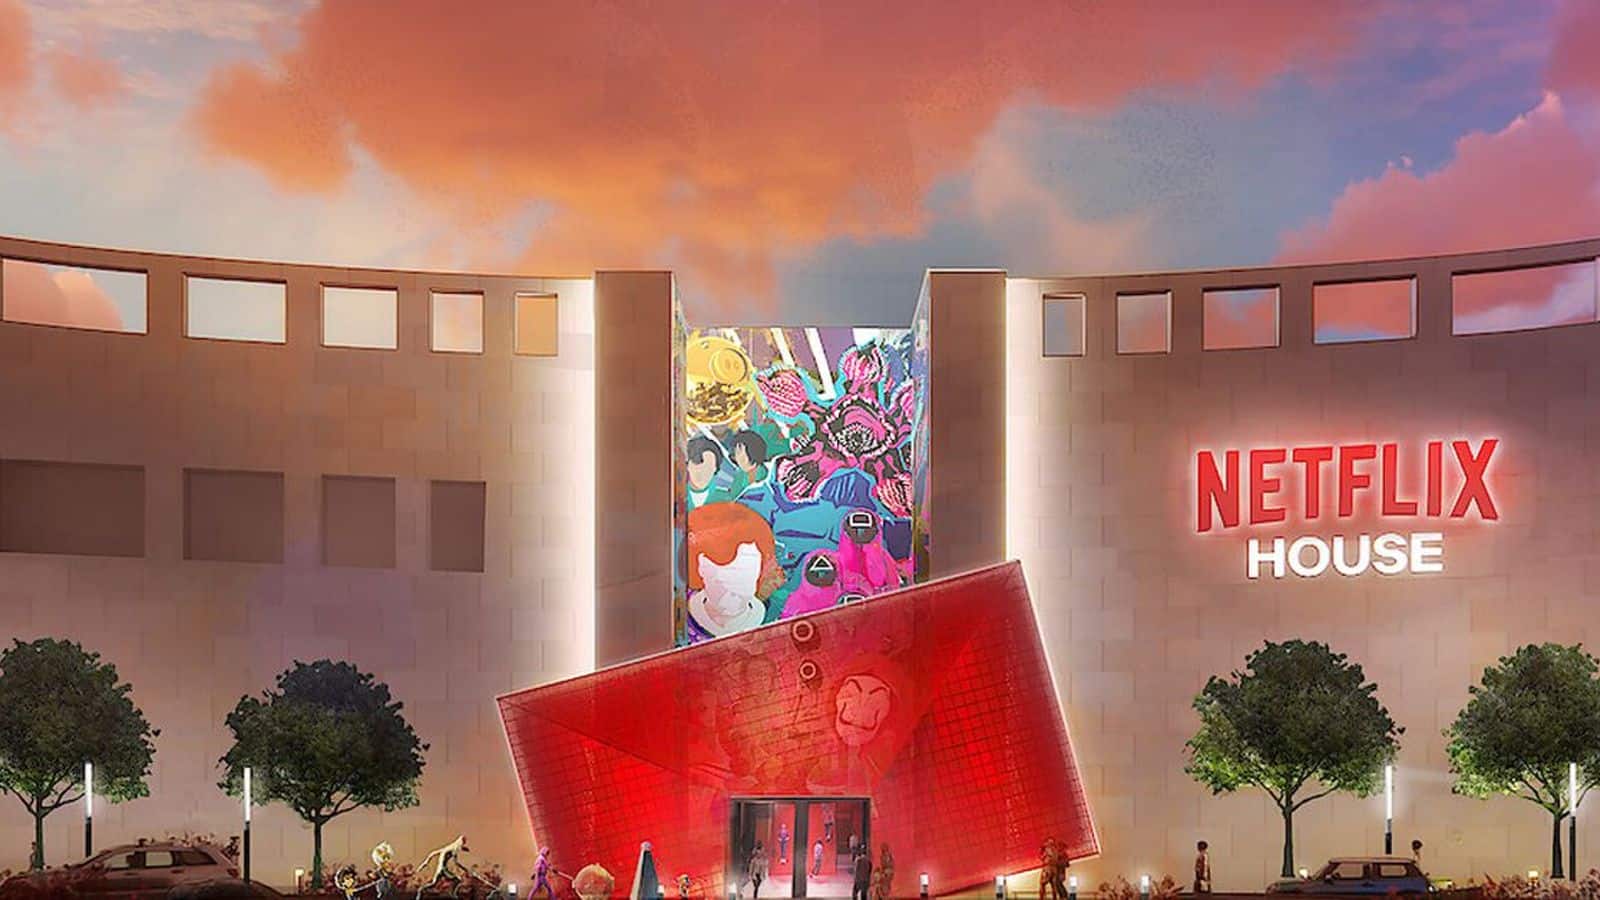 Binge-watching gets real: Netflix announces immersive 'Netflix House' experiences 